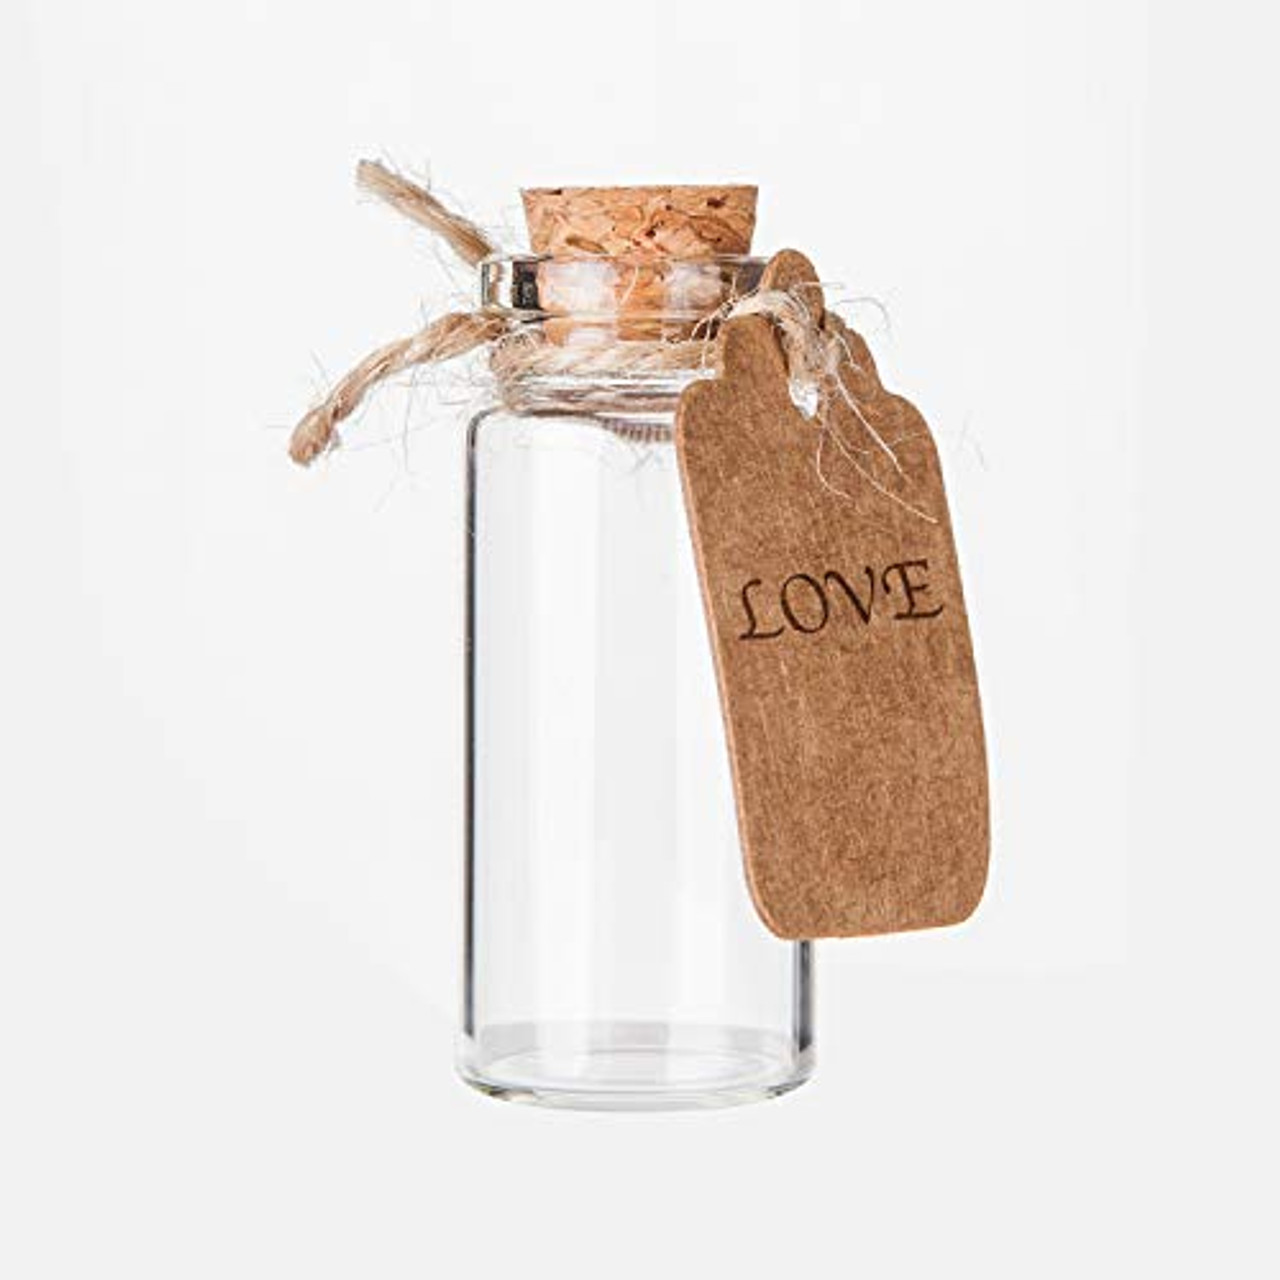 Mini Glass Sand Bottles Heart Pendants Cute Jars With Cork